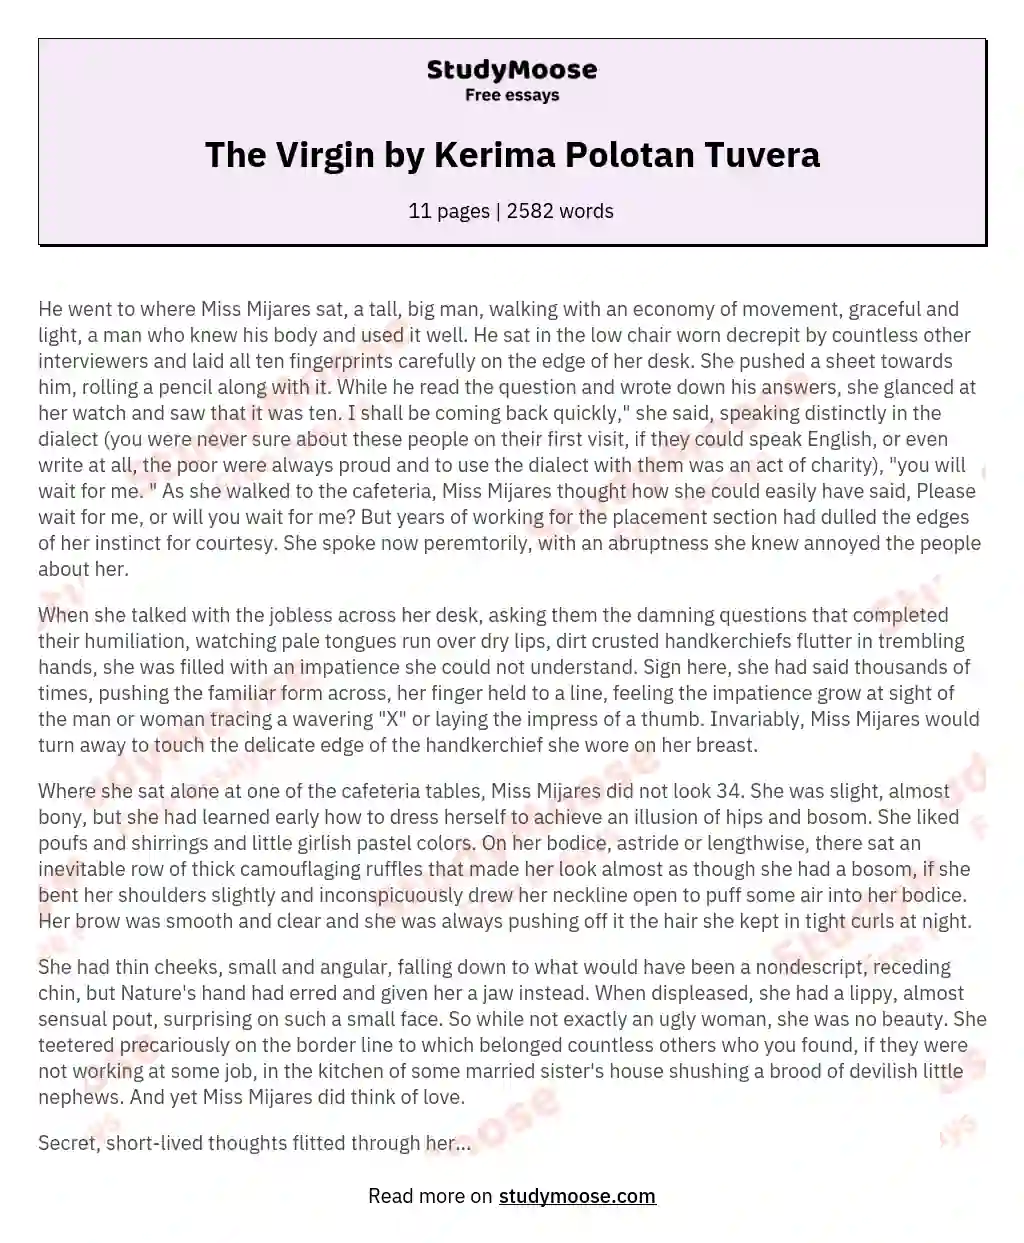 The Virgin by Kerima Polotan Tuvera essay